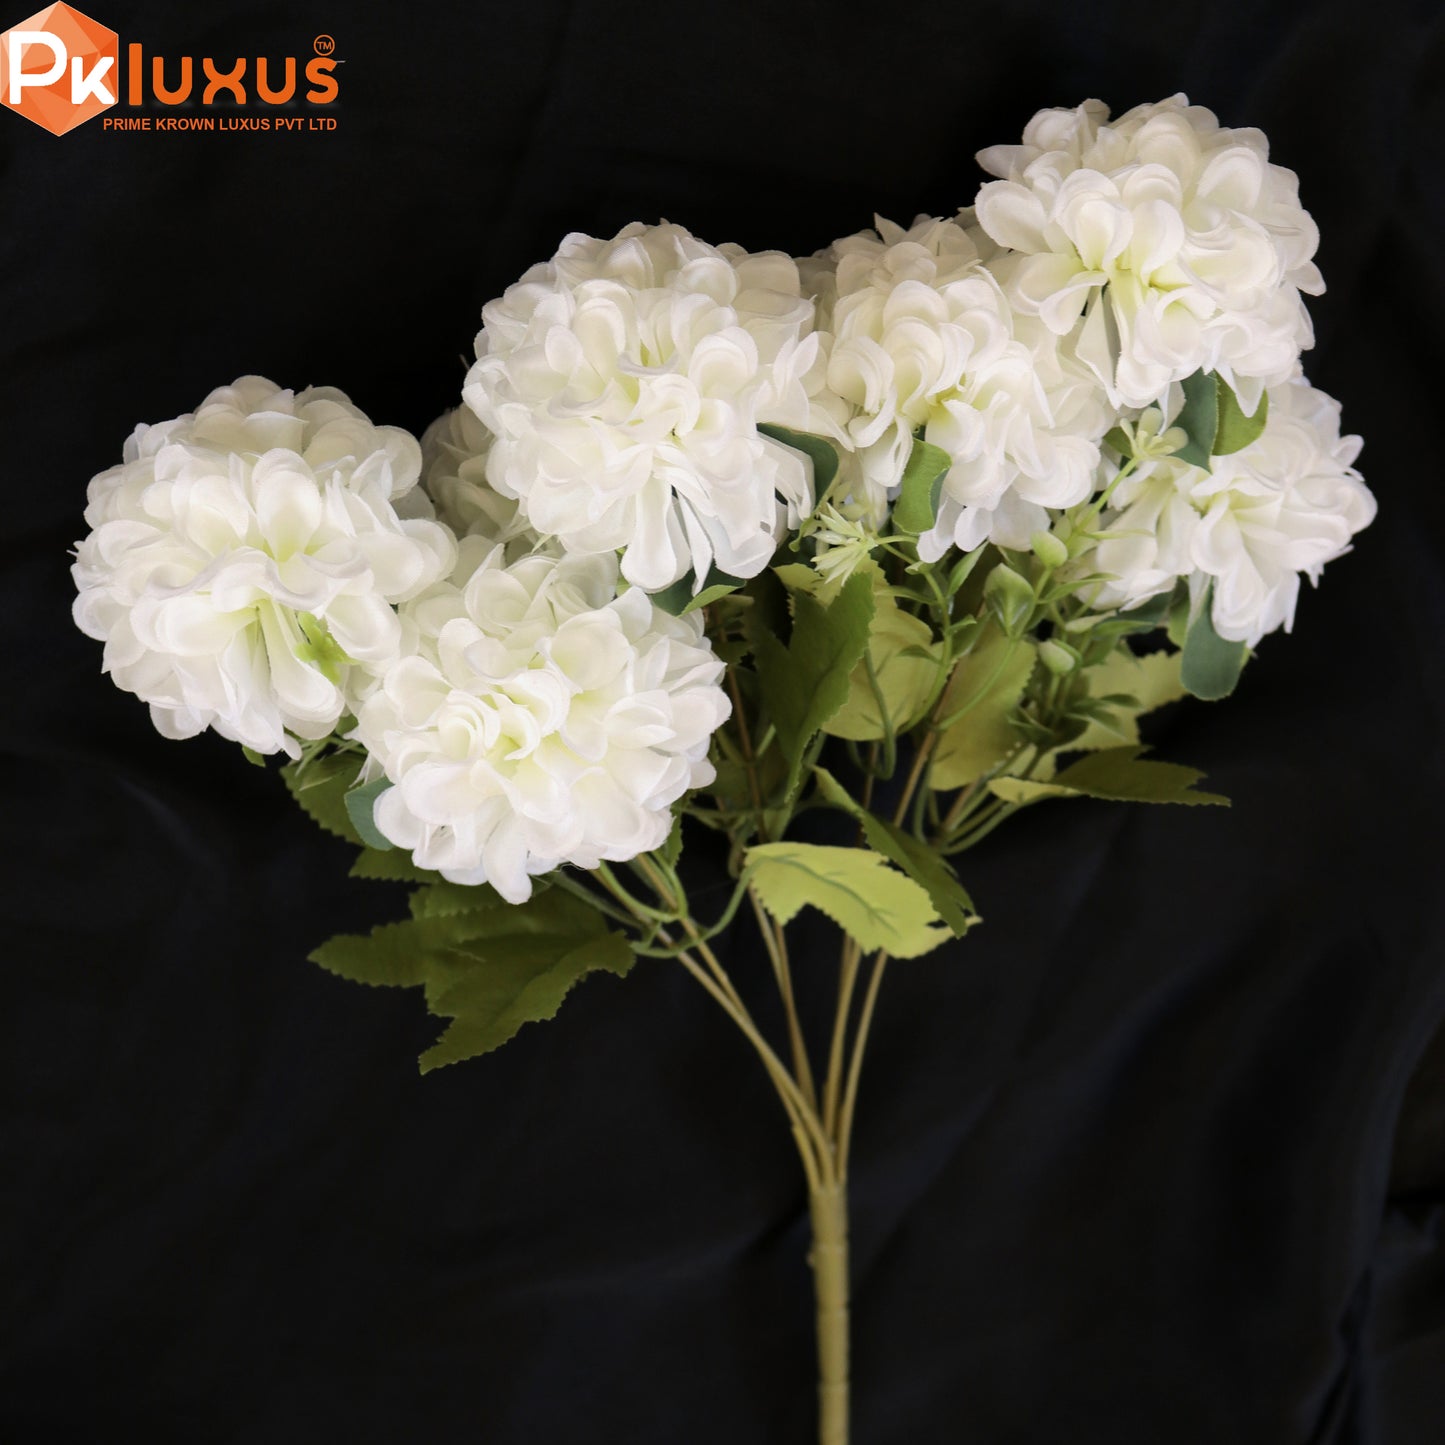 24-inch White Hydrangeas Ball Flowers By PK LUXUS™ - PK LUXUS